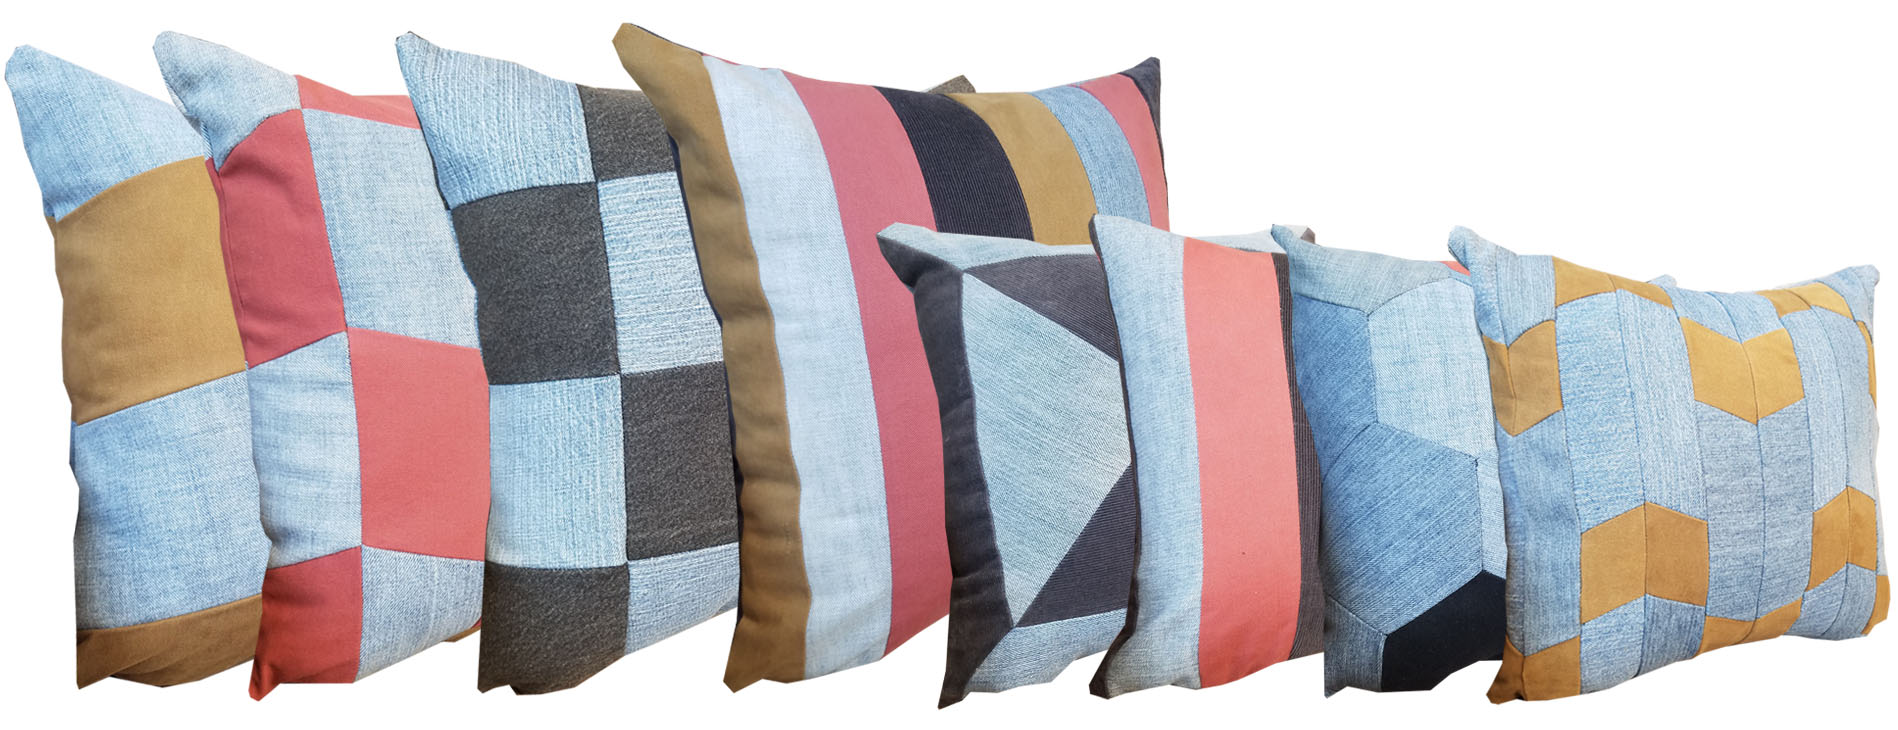 Upcycled Denim Throw Pillows: Denim Pillow Talk